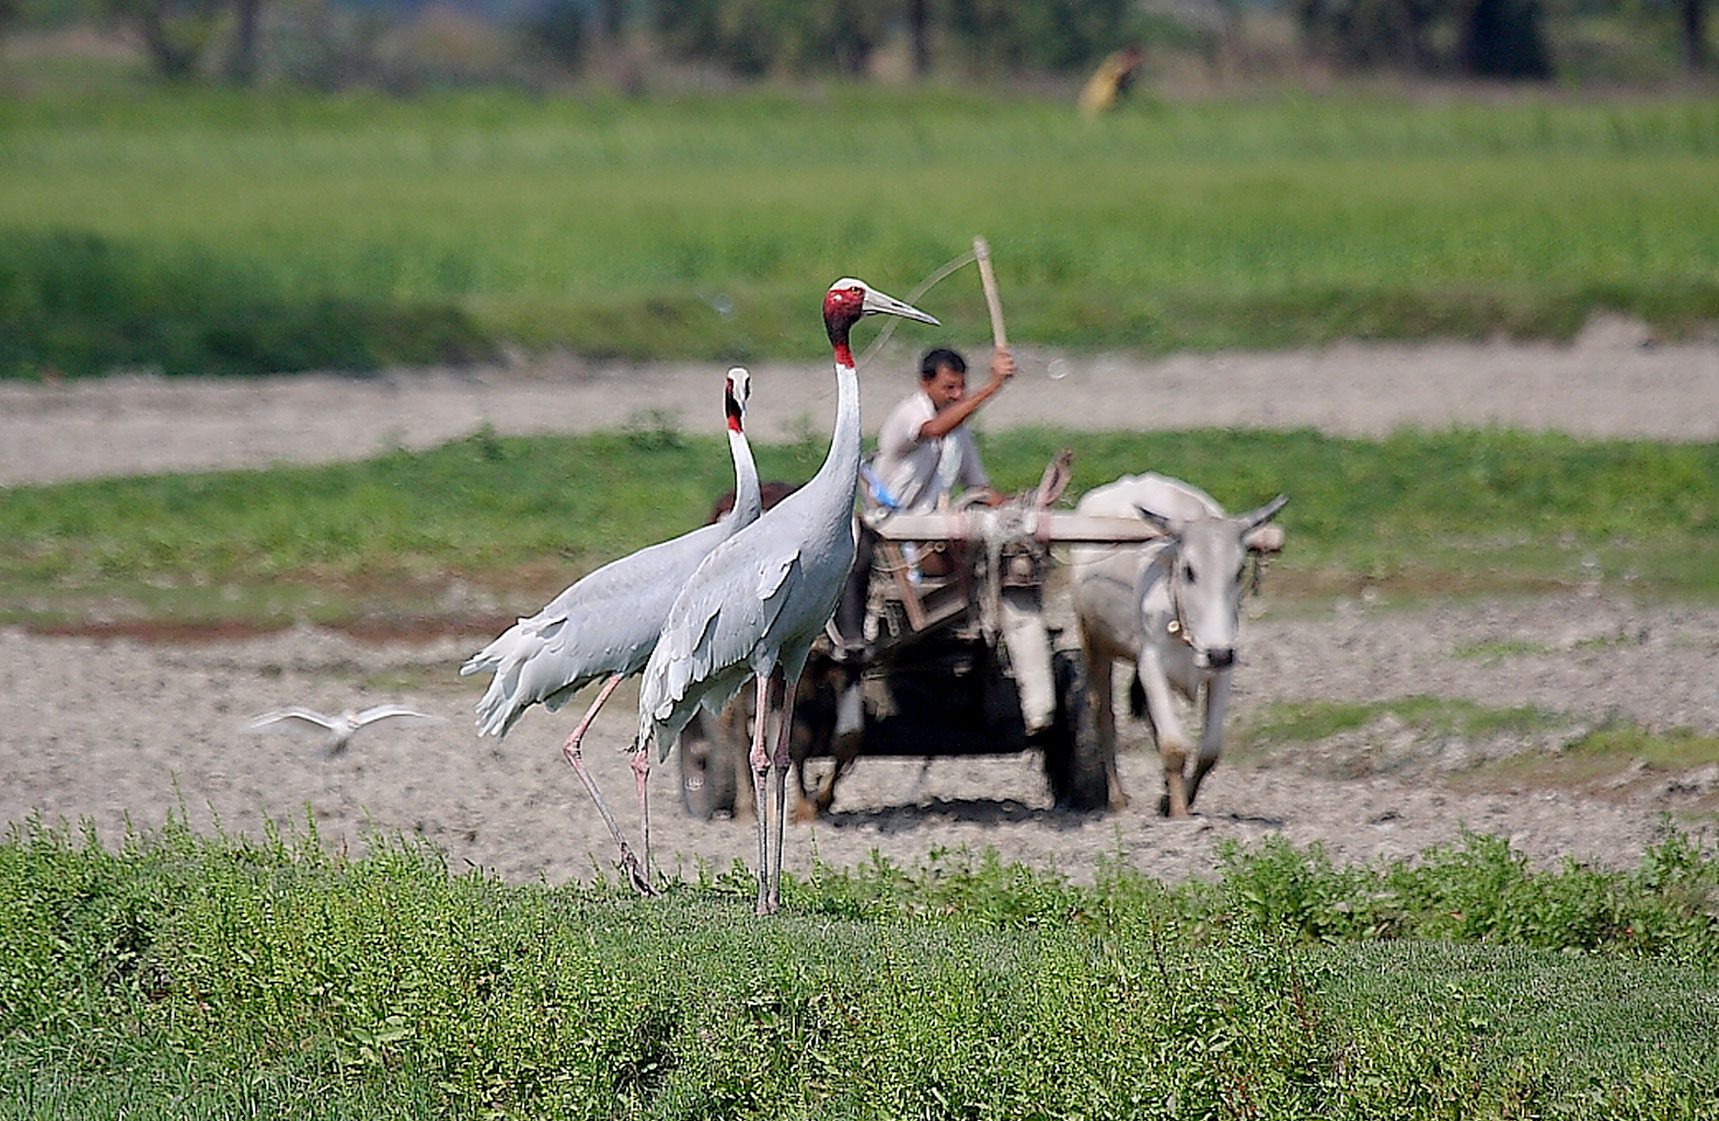 in Uttar Pradesh, farmers welcome the cranes to their fields. Photo by K.S. Gopi Sundar.